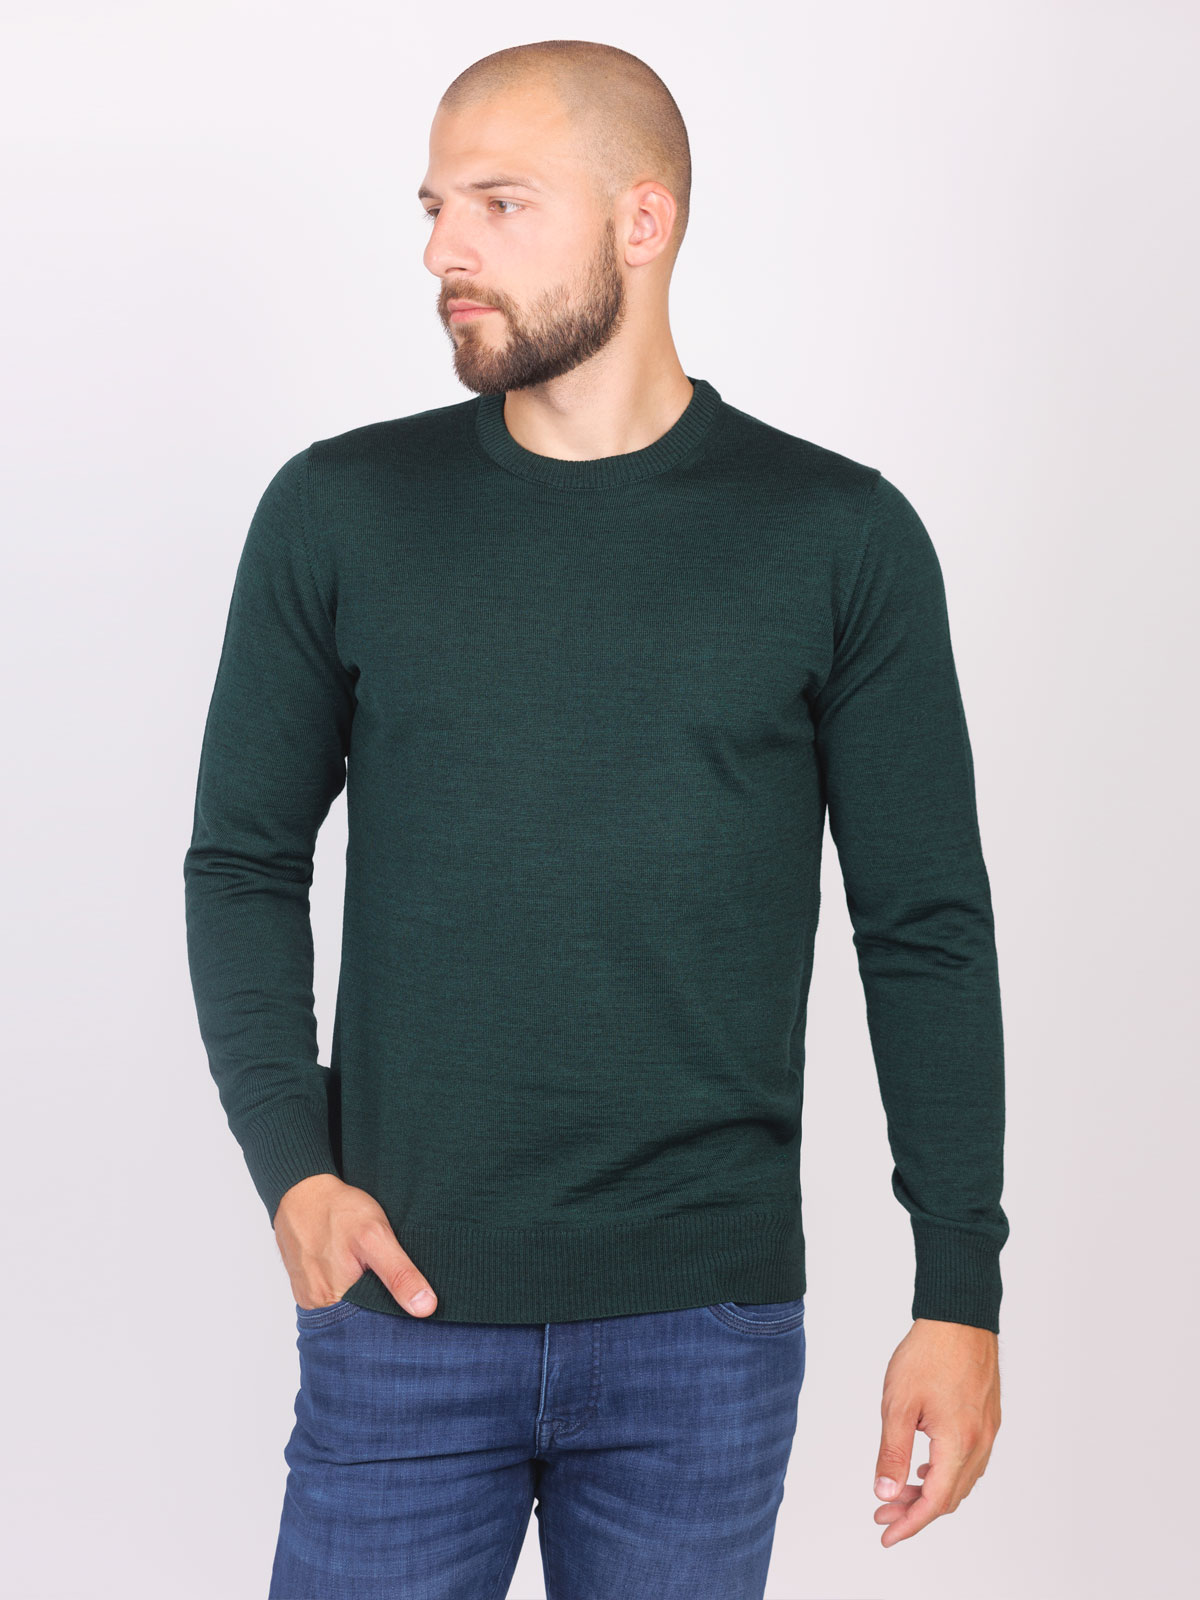 Mens sweater in dark green - 33098 € 42.74 img3